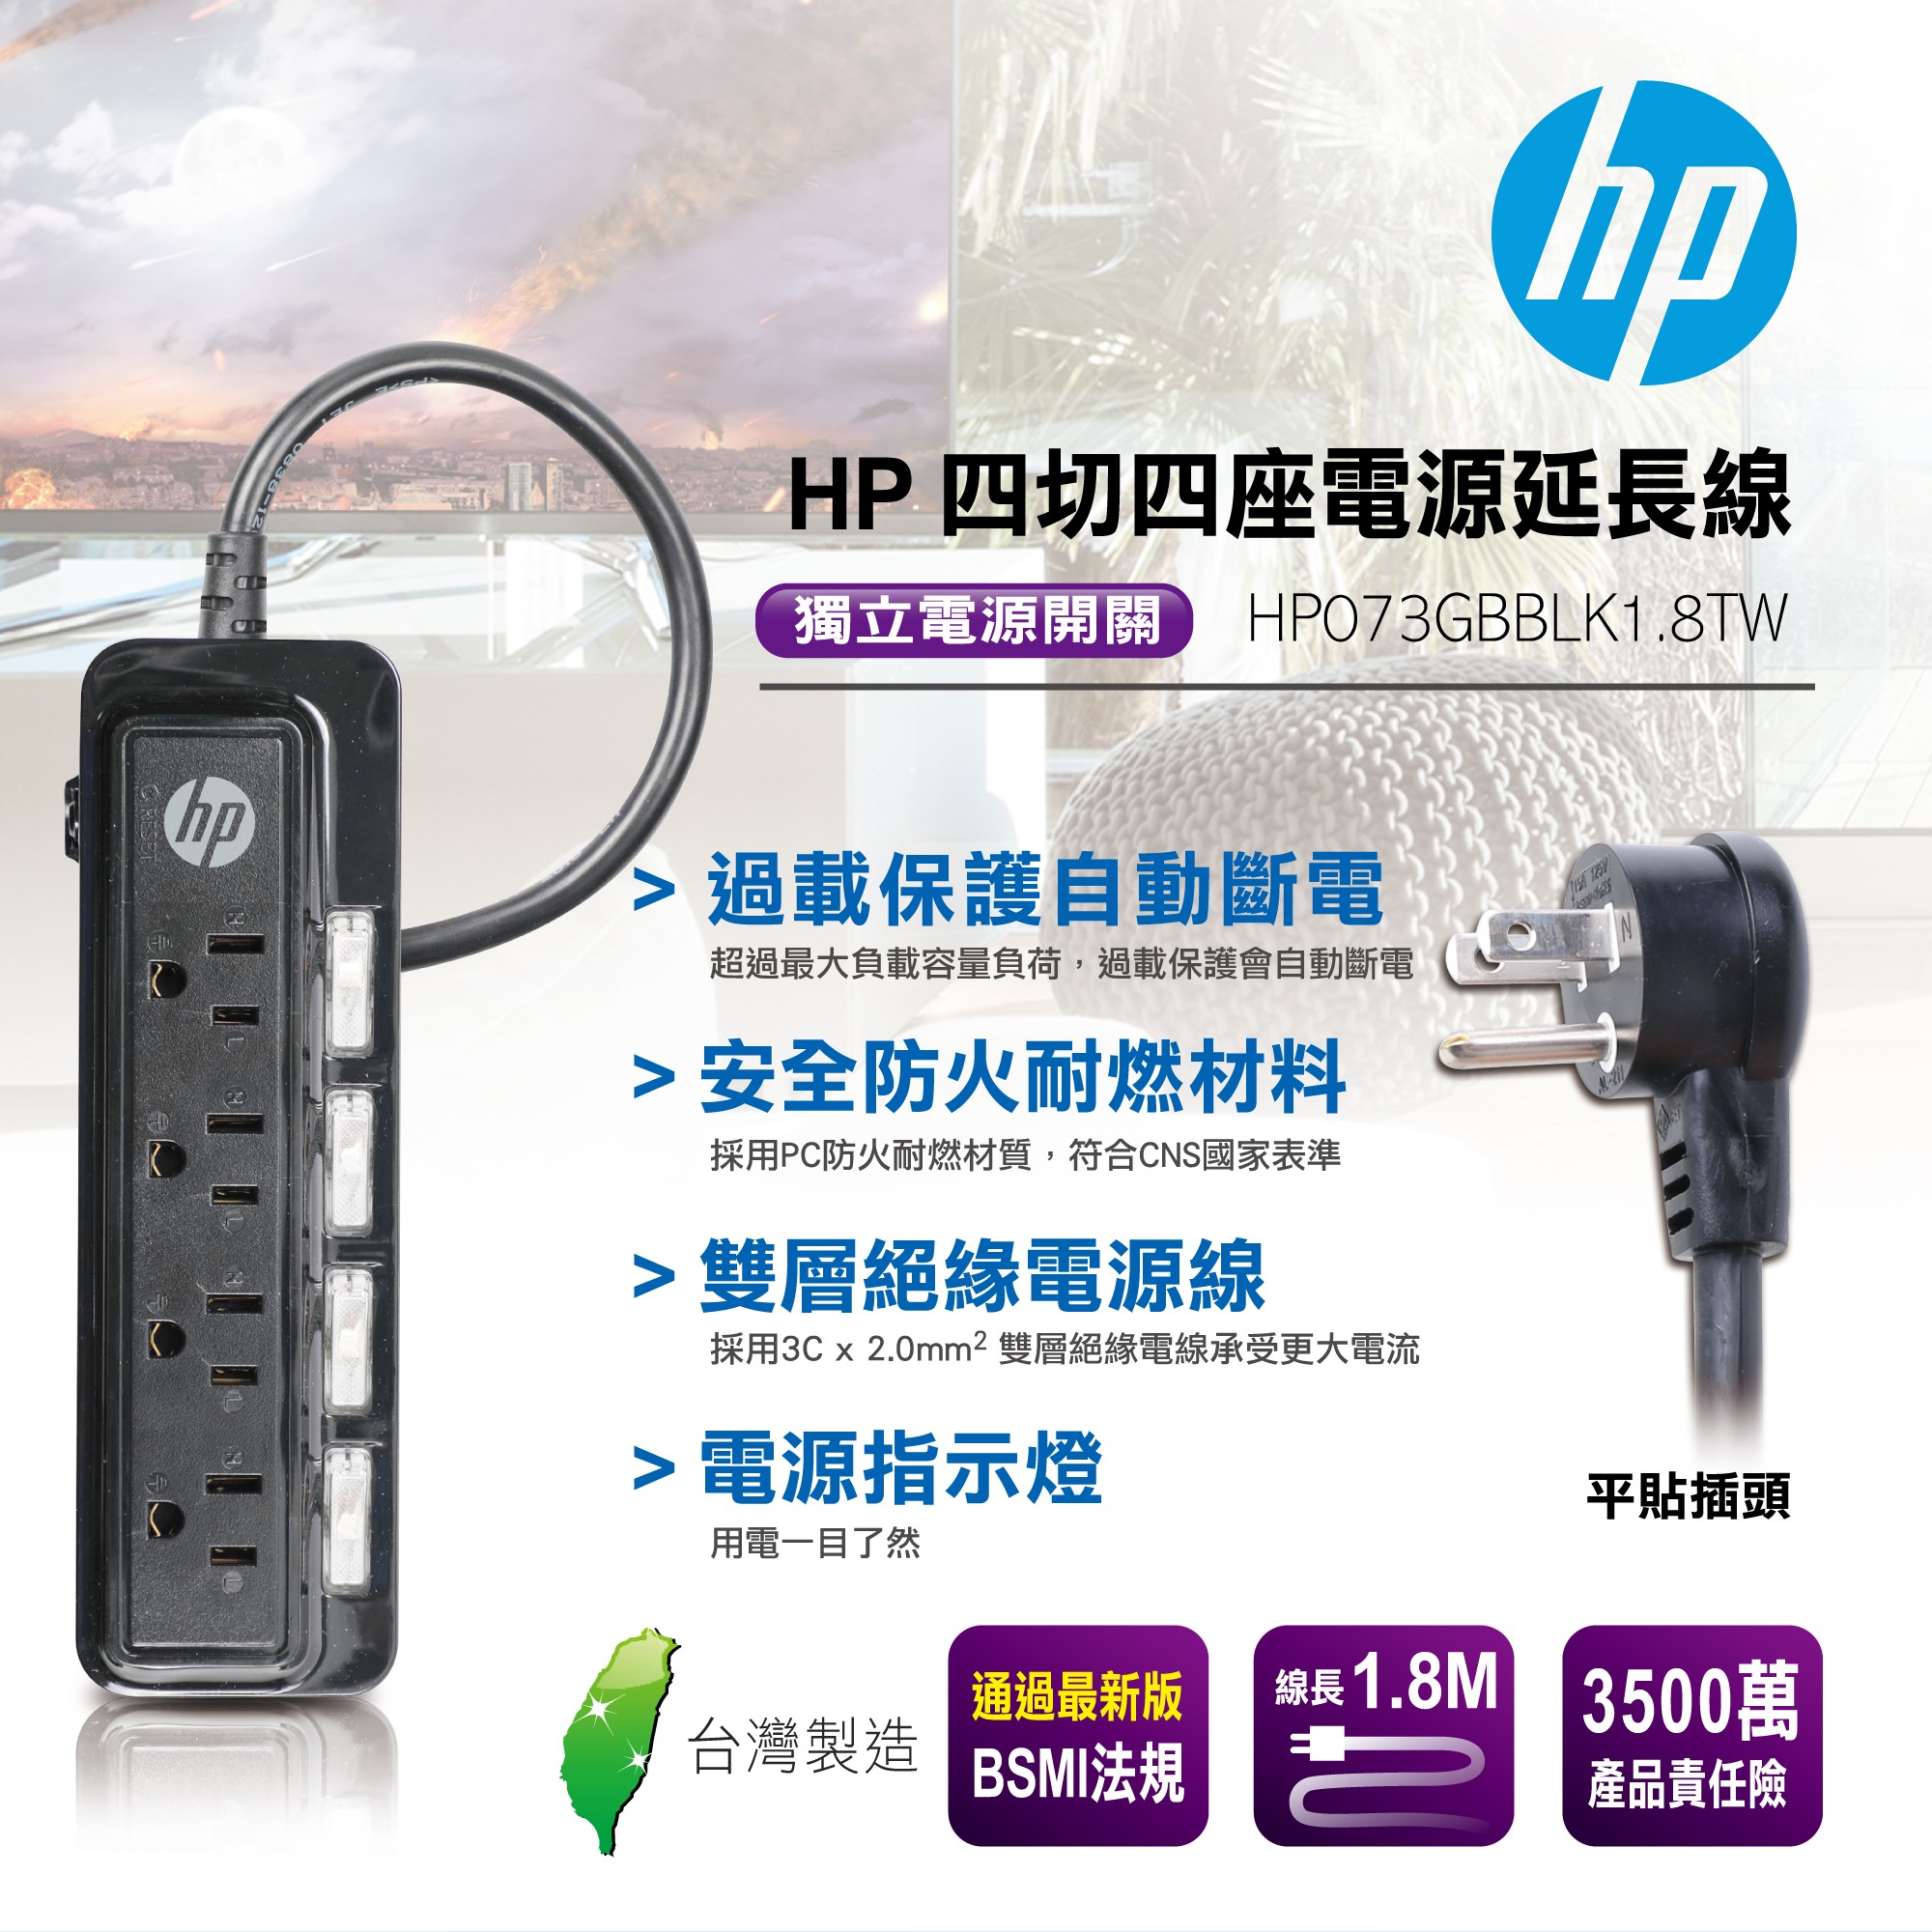 HP 四切四座電源延長線 HP073GBBLK1.8TW